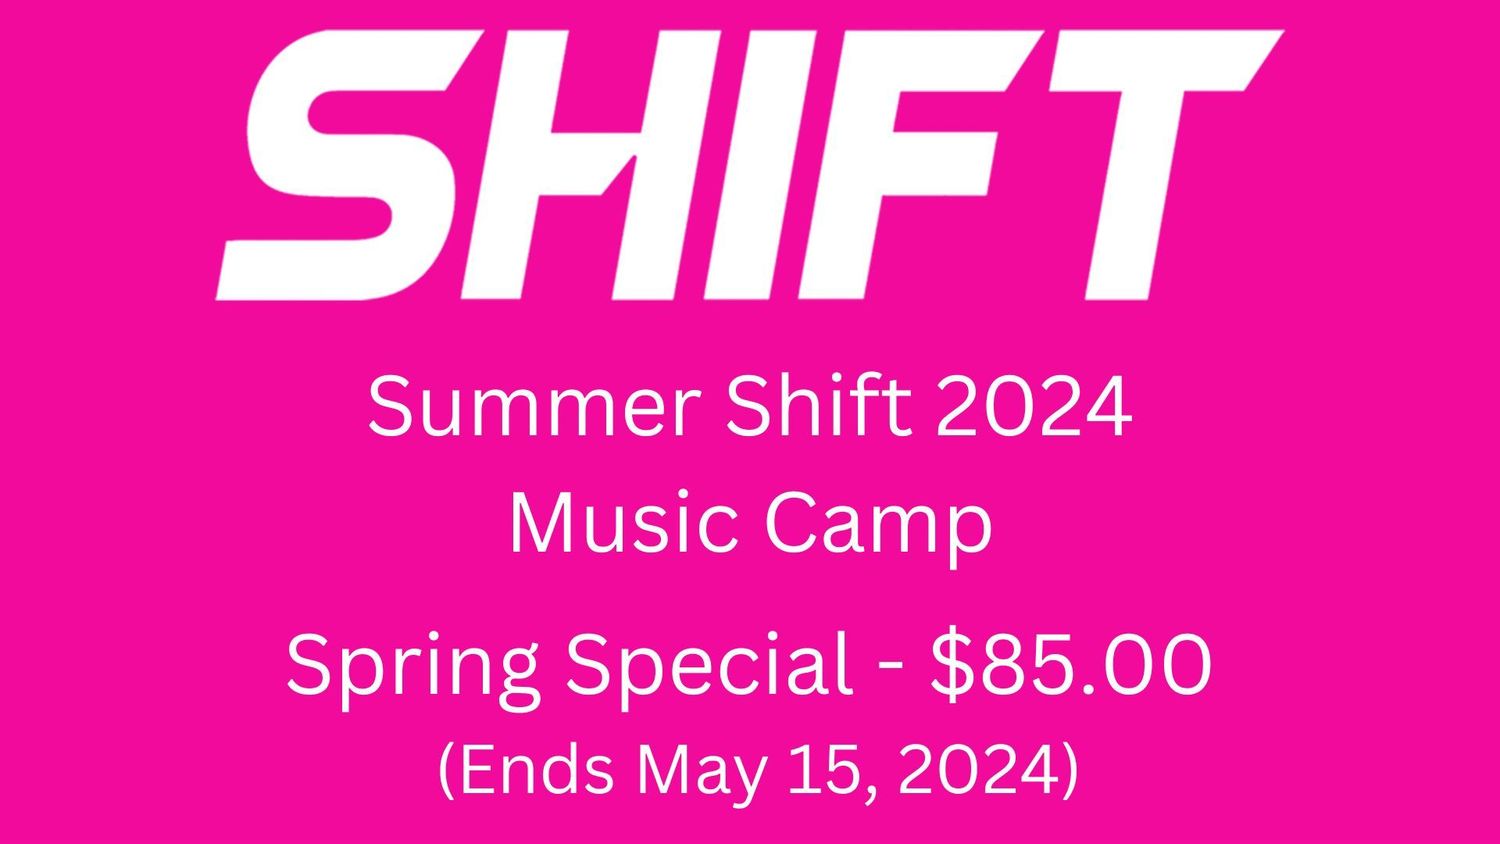 Summer Shift 2024 / Music Camp Registration